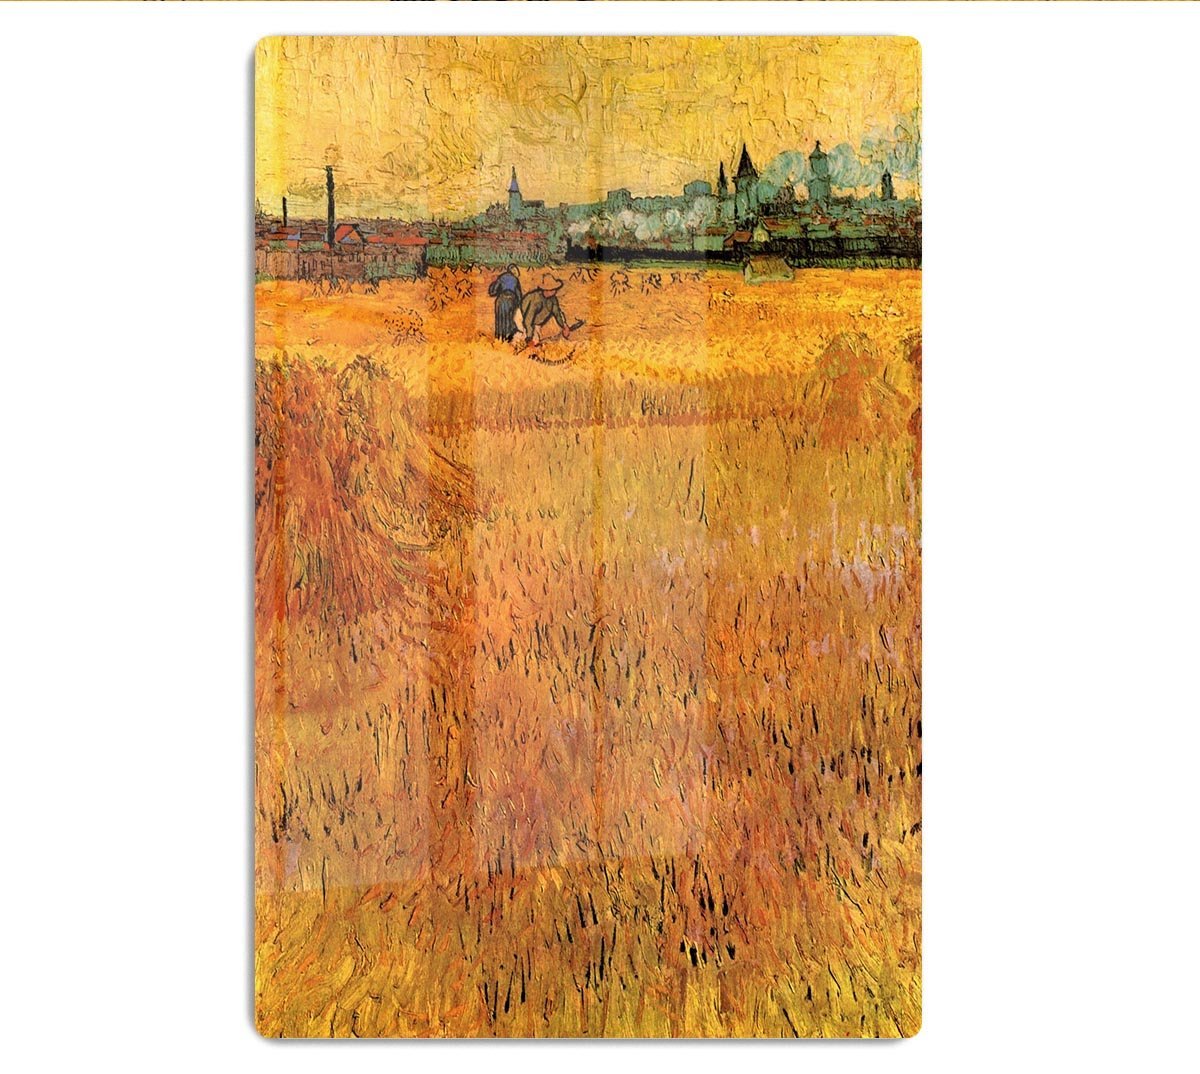 Arles View from the Wheat Fields by Van Gogh HD Metal Print